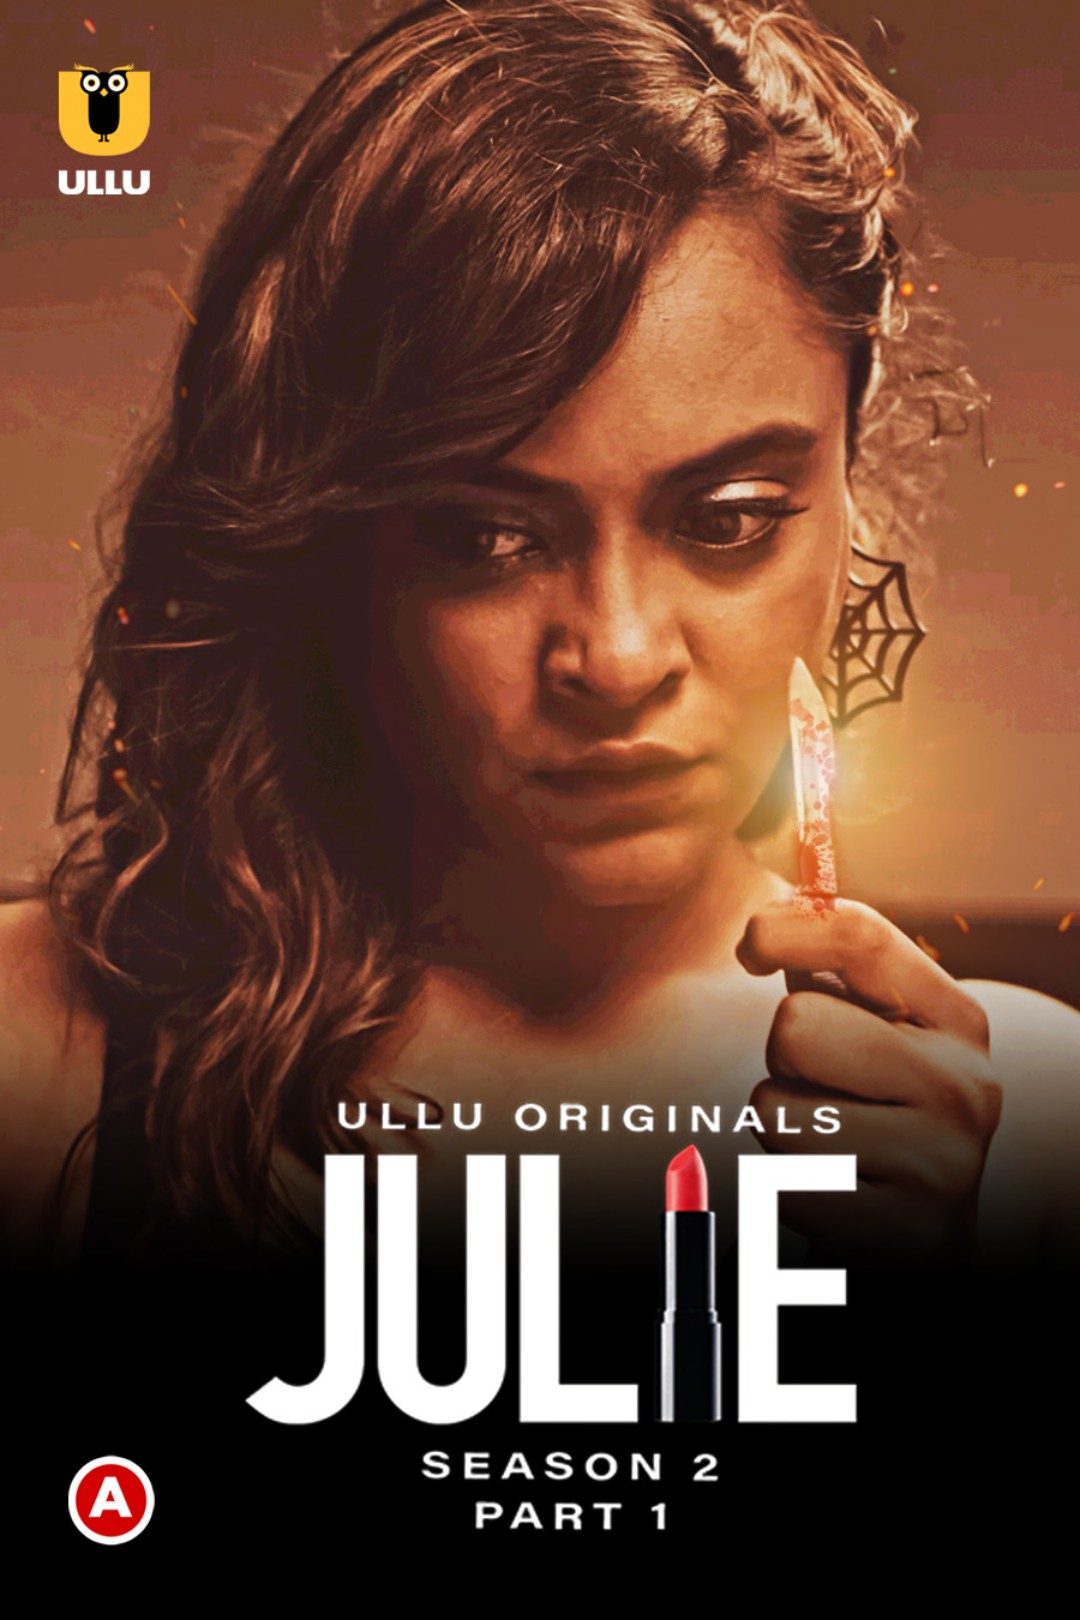 Julie Season 2 (Part 1) (2022) 720p HDRip Ullu Hindi Web Series [370MB]